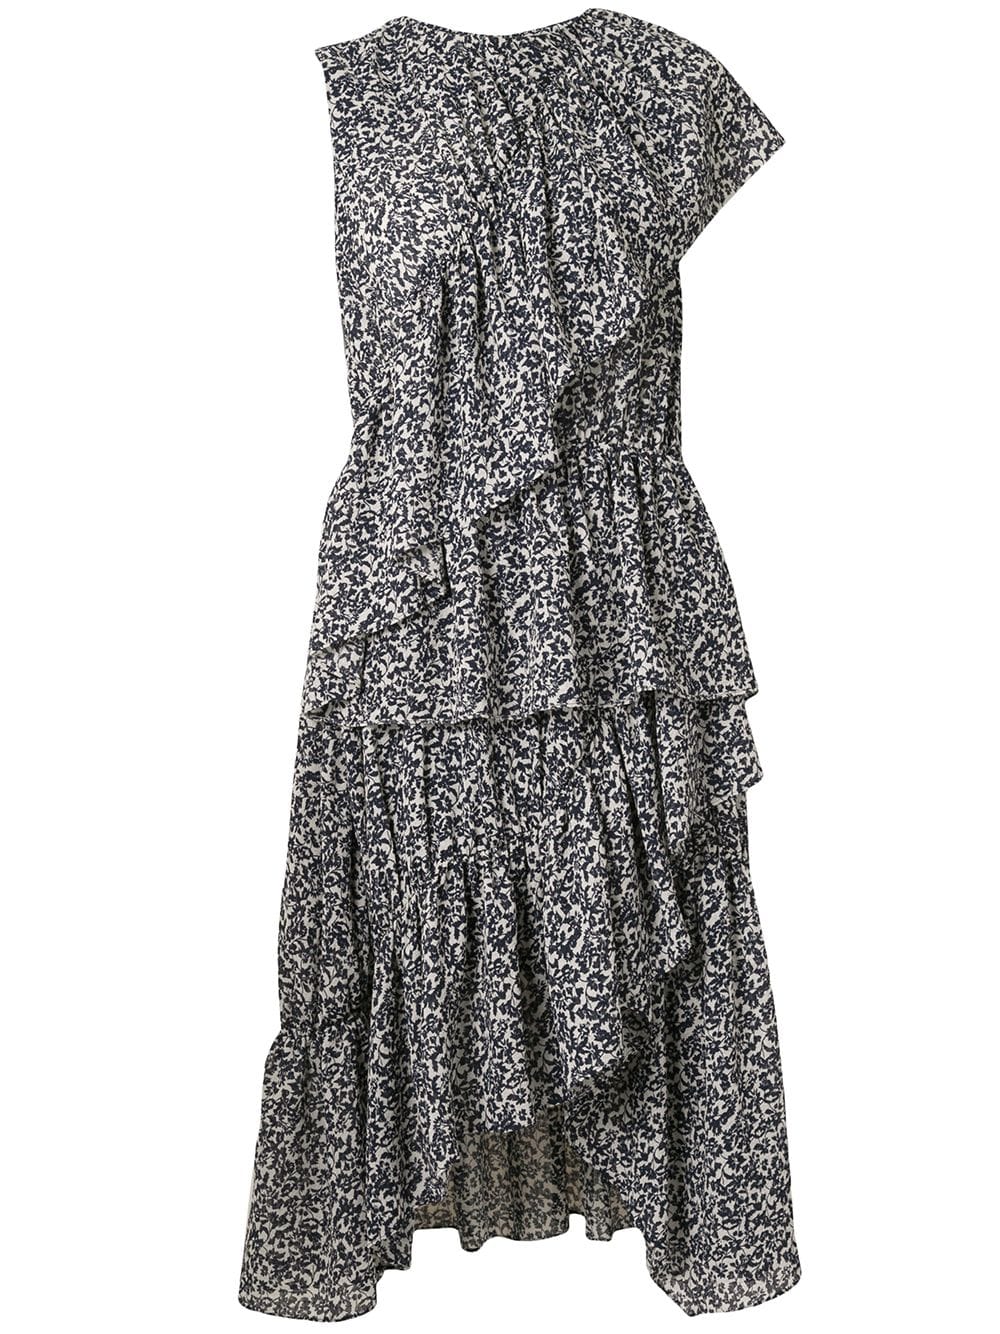 Image 1 of Goen.J 플로럴 프린트 비대칭 러플 드레스